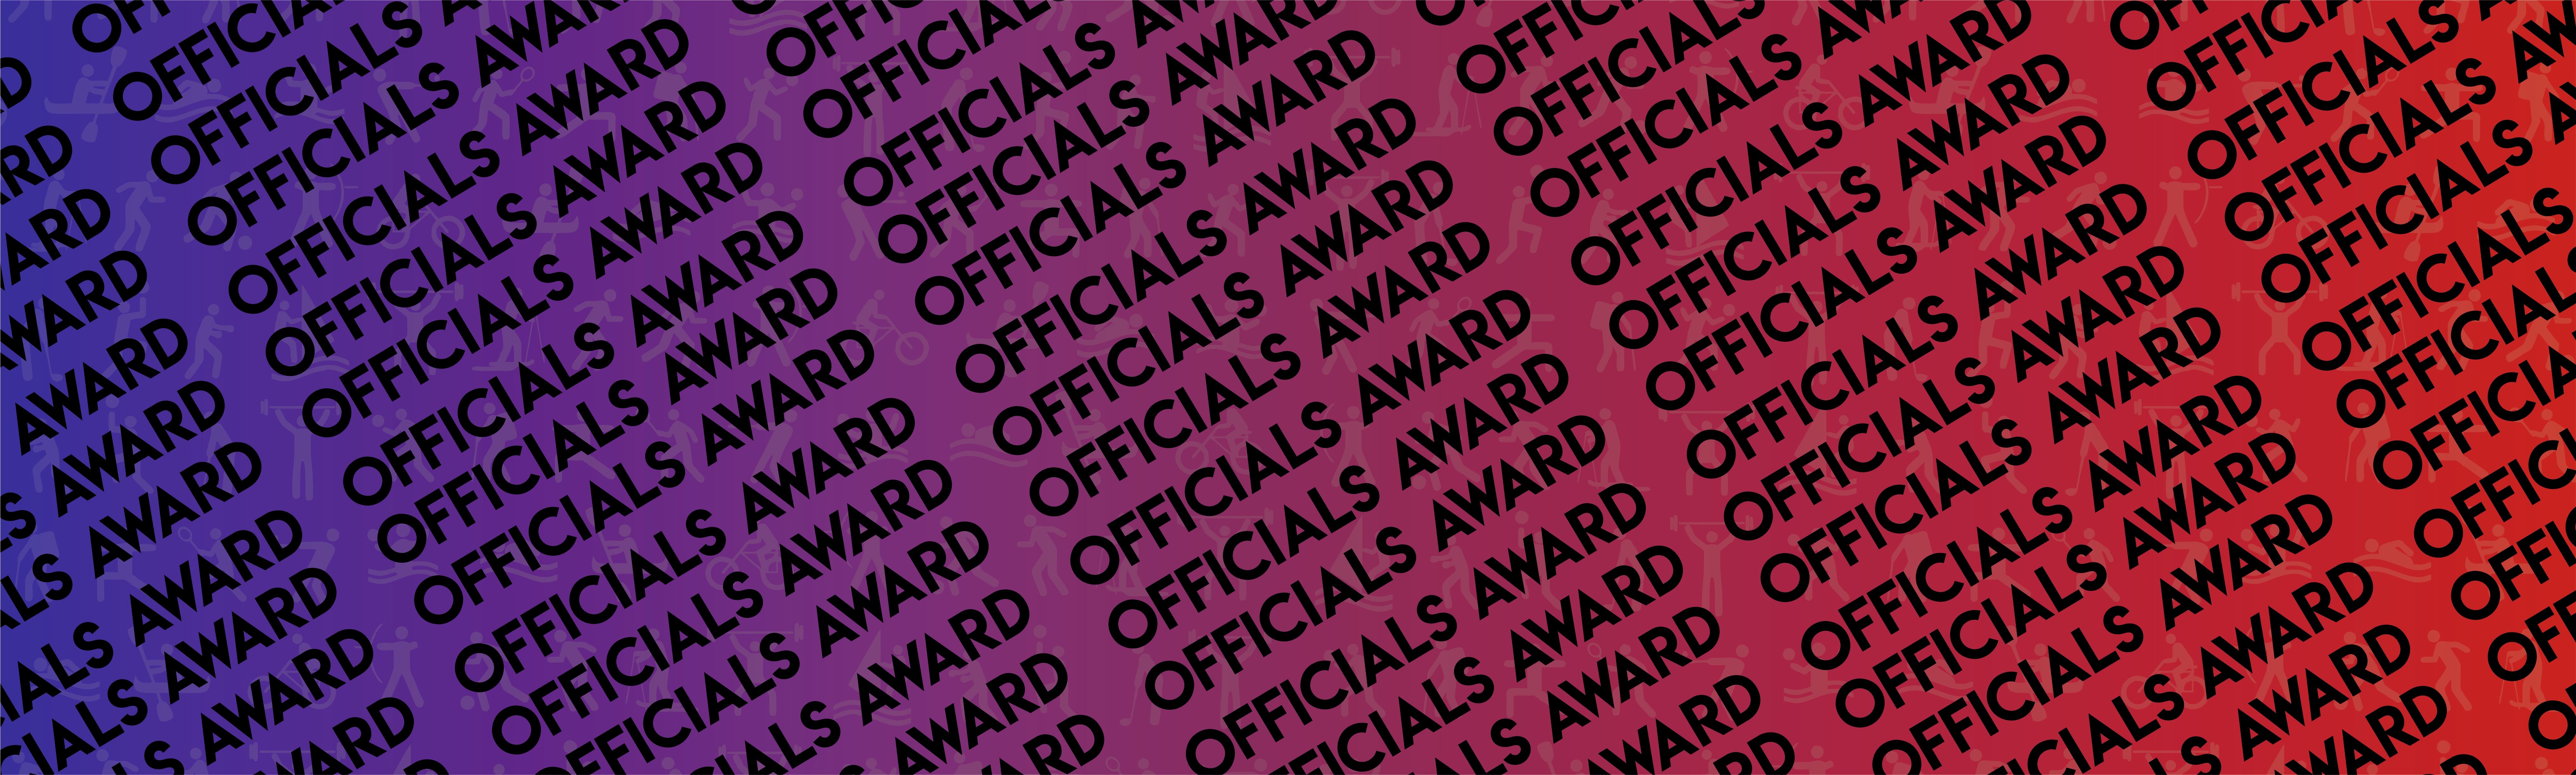 Officials Awards